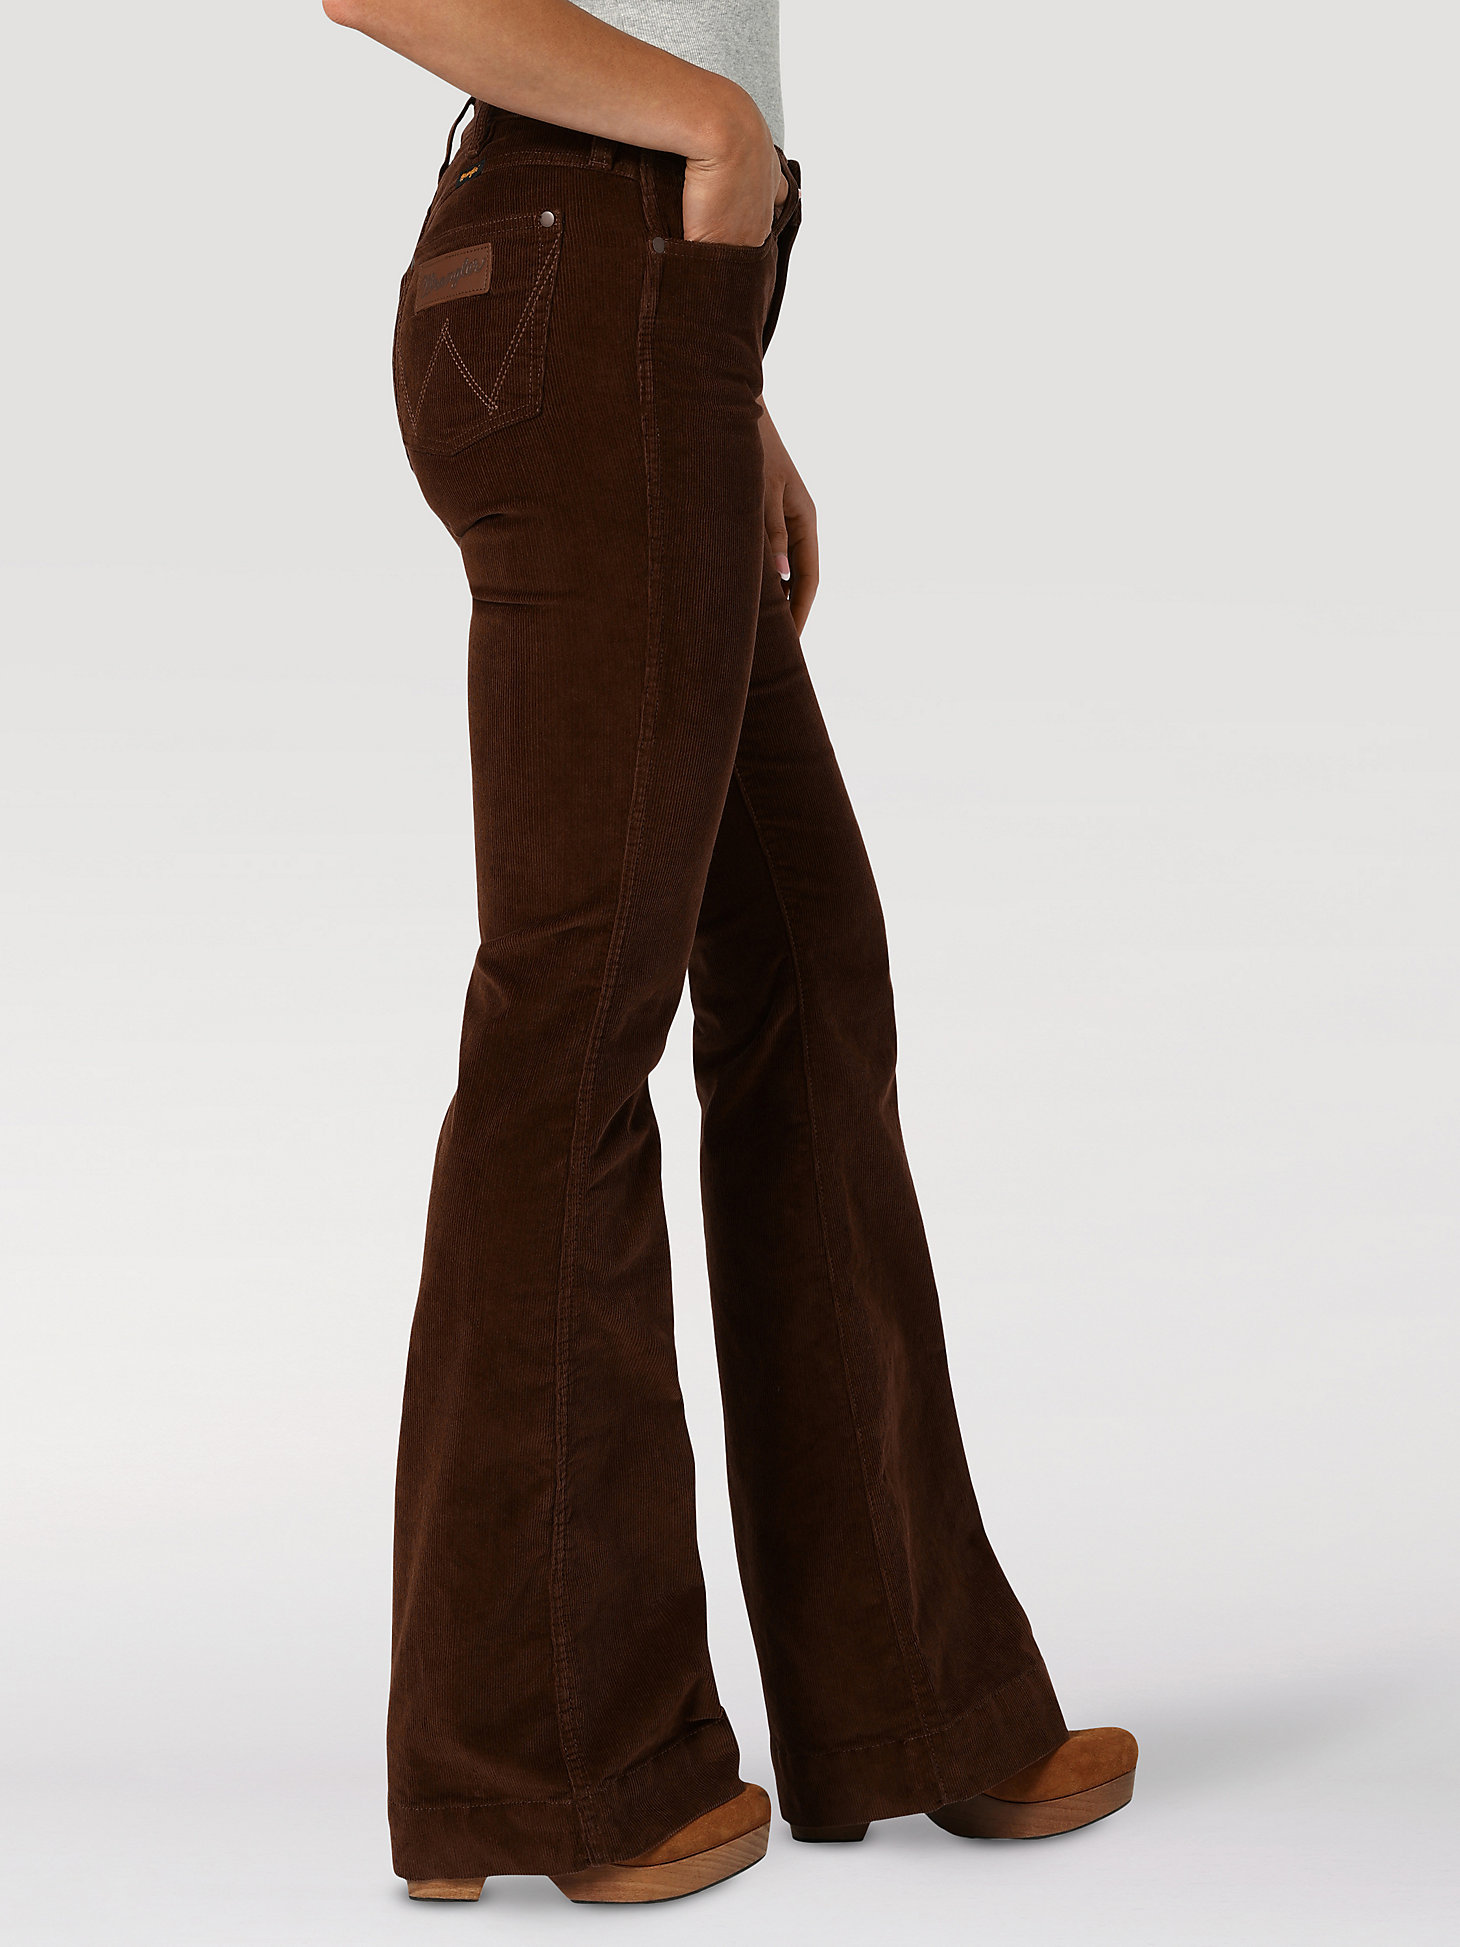 Women's Wrangler Retro® High Rise Corduroy Trouser Jean in Brooke alternative view 2